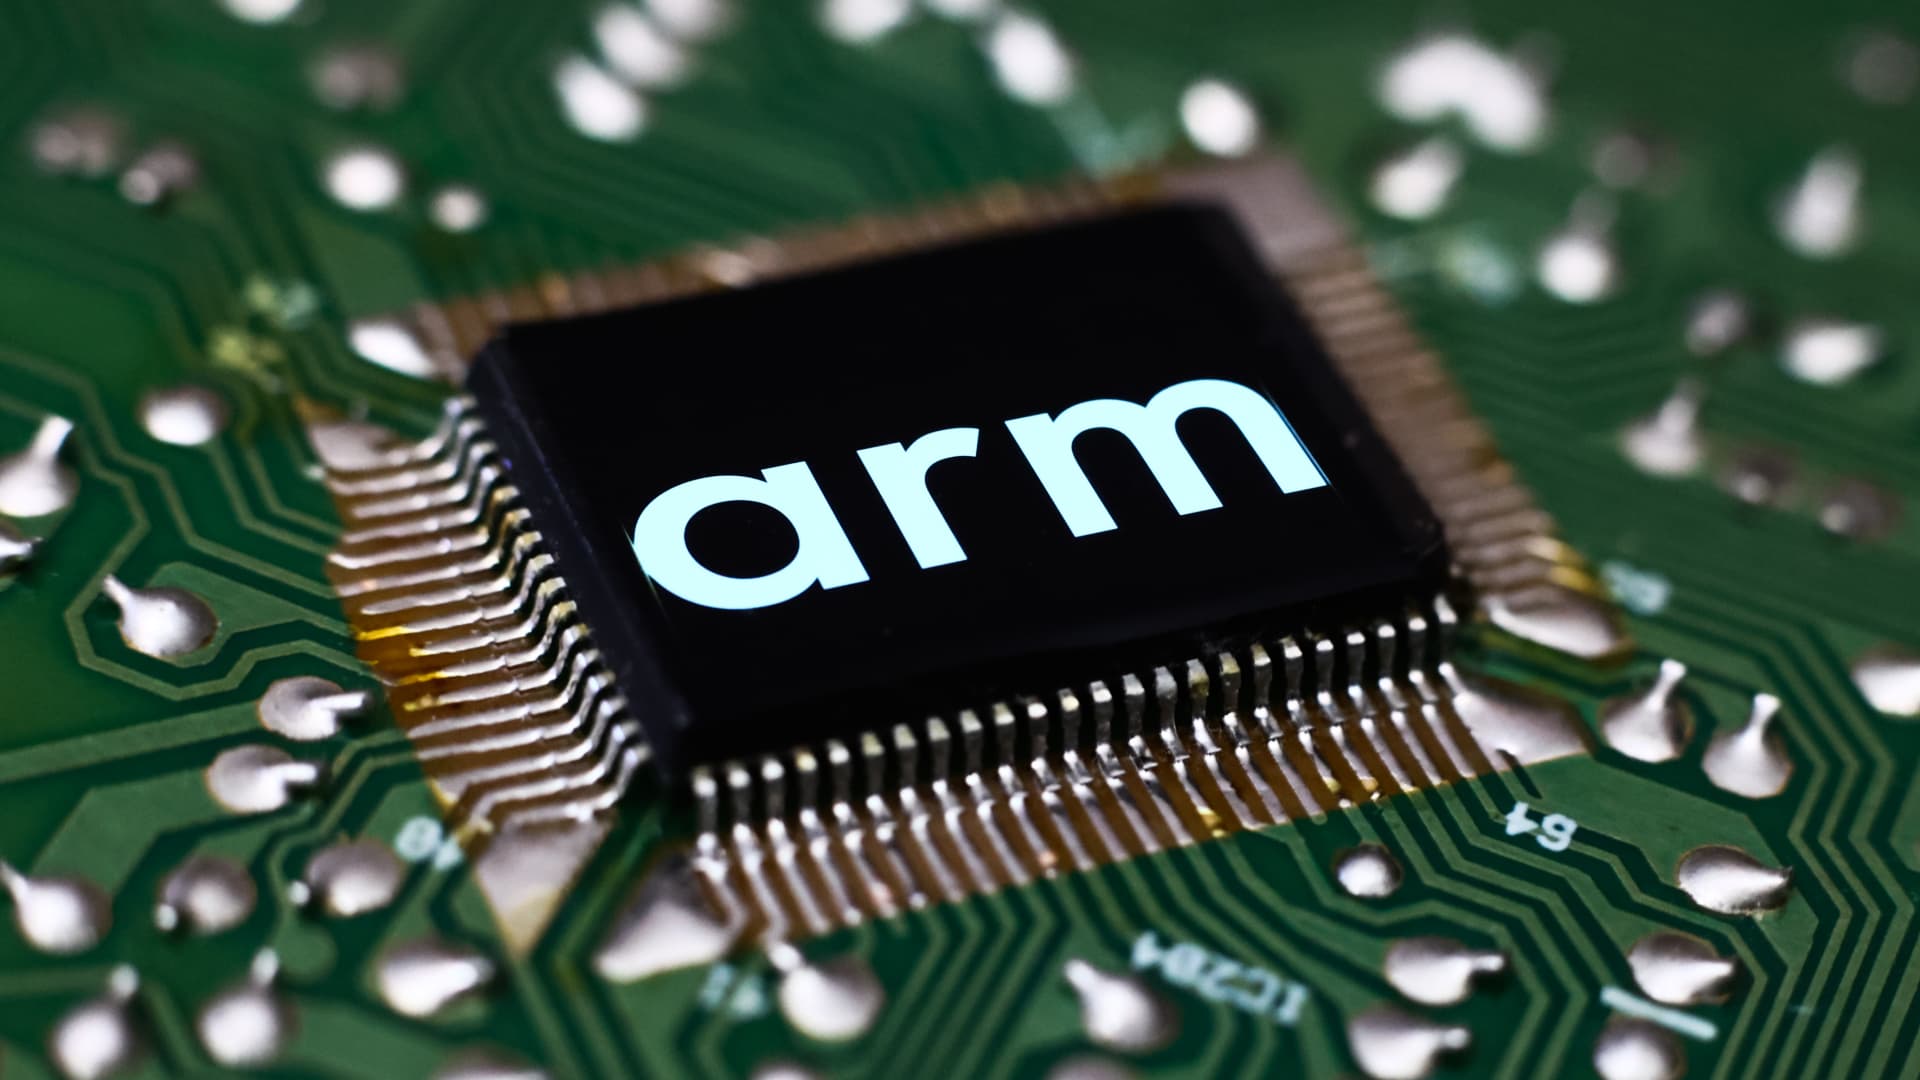 Chip designer Arm’s shares plunge nearly 9% after lackluster revenue guidance